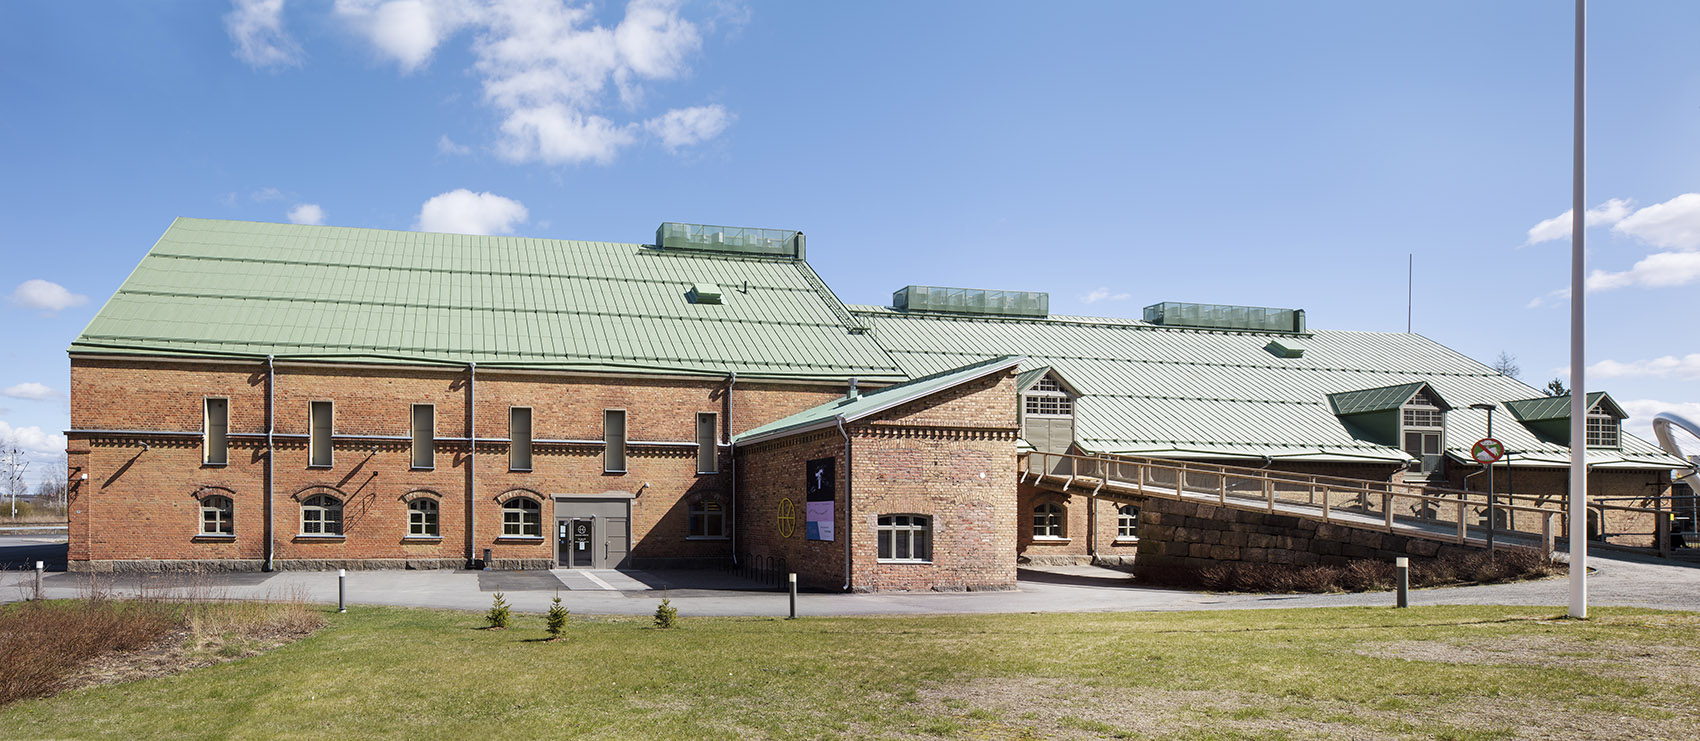 Kalevan Navetta文化艺术中心，芬兰/材料与结构的交响曲-3